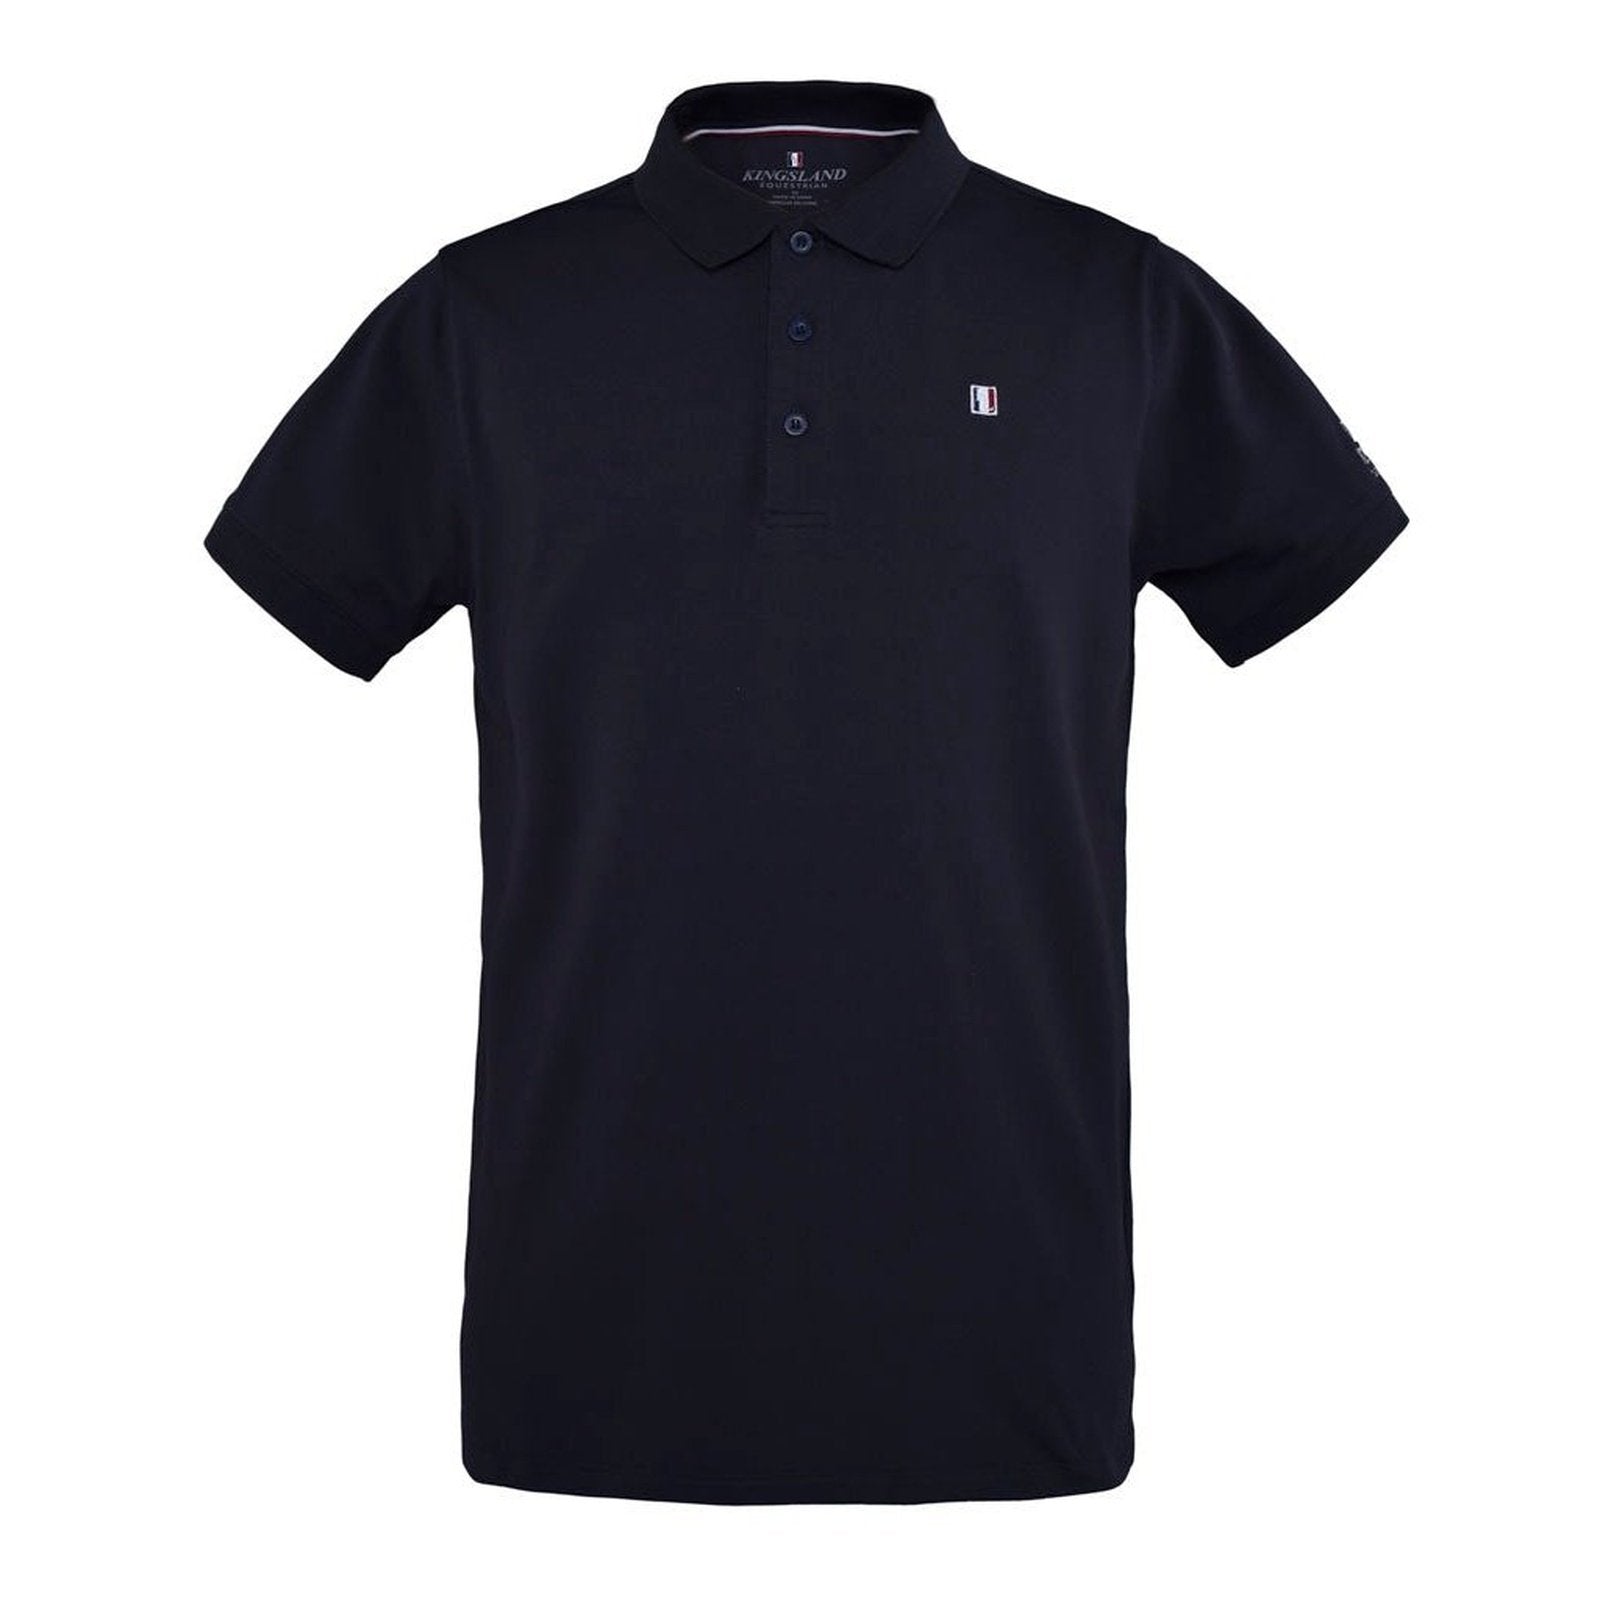 Kingsland Classic Herren Polo-Pique Shirt in schwarz & blau bei SP-Reitsport Kingsland bei SP-Reitsport